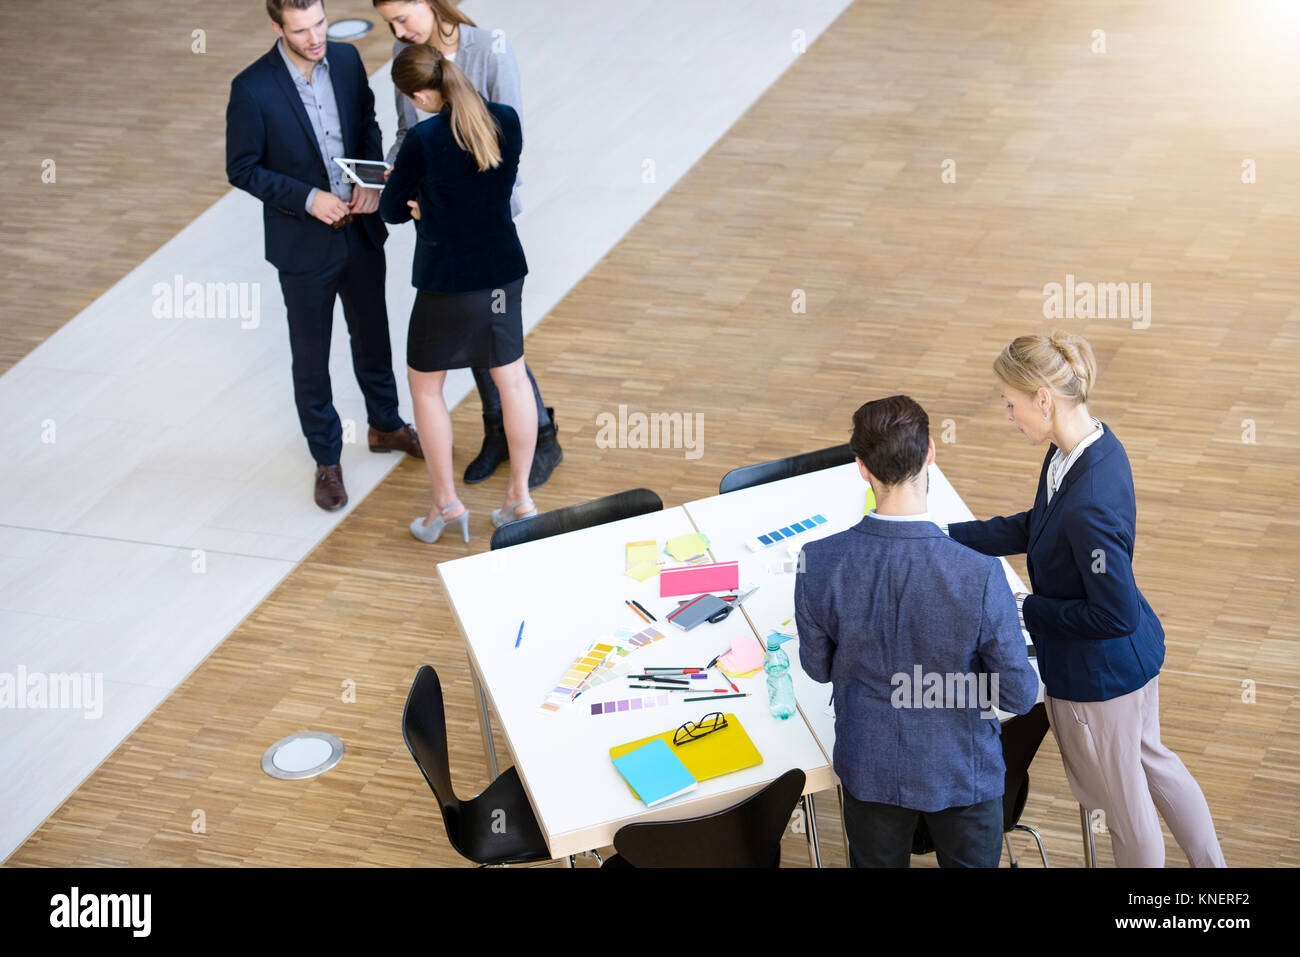 Businesswomen and men having group meeting in office Stock Photo